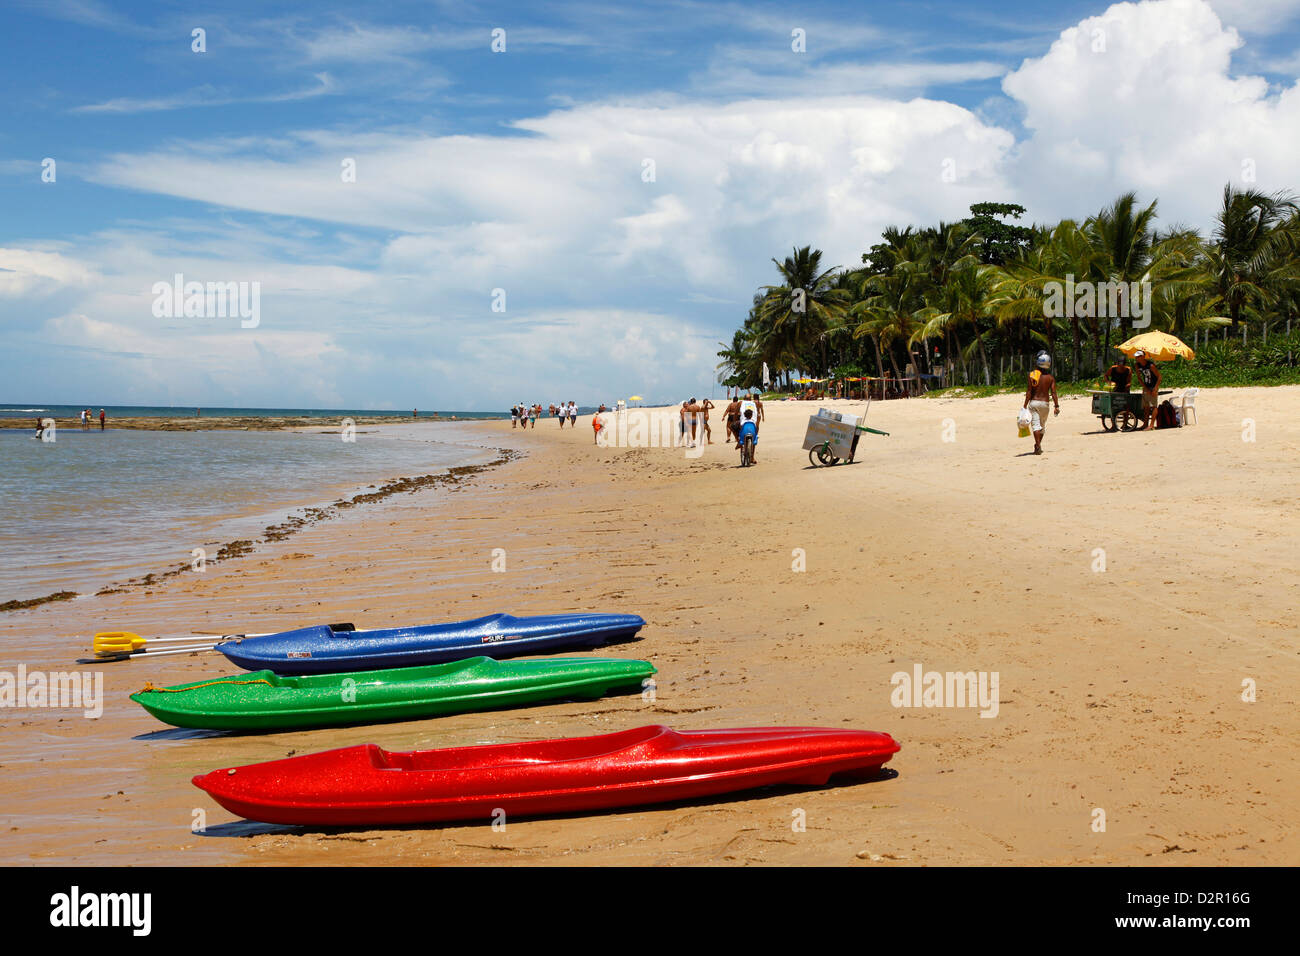 People at Parracho Beach, Arraial d'Ajuda, Bahia, Brazil. Stock Photo